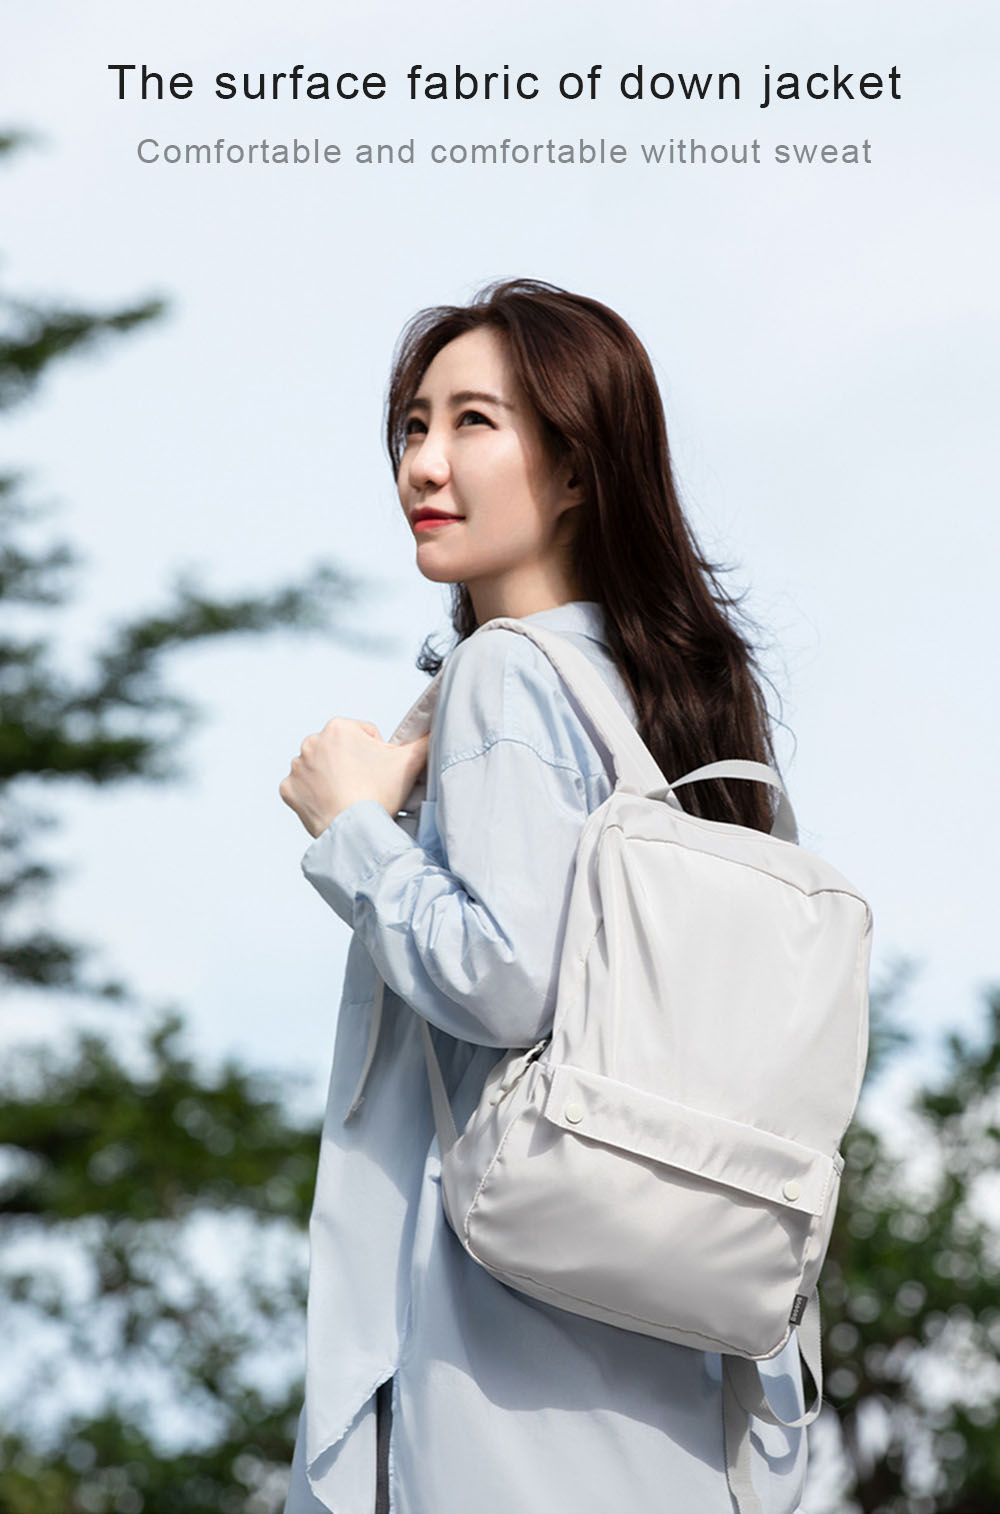 Baseus-Backpack-Laptop-Bag-Schoolbag-Shoulders-Storage-Bag-Business-Leisure-Outdoor-Sports-Student-W-1725832